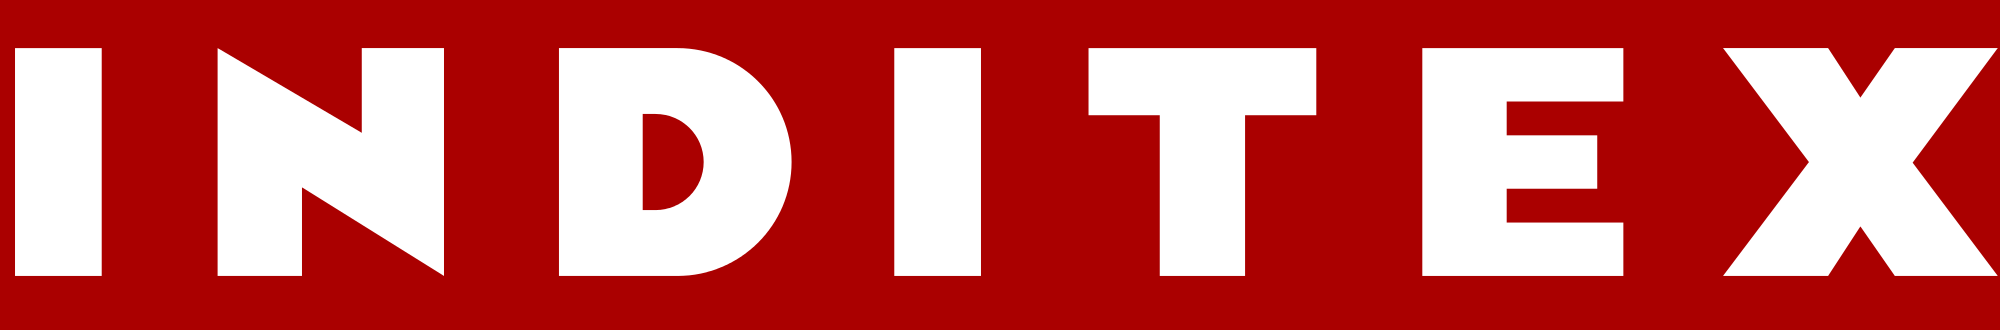 INDITEX Logo - Inditex Logo PNG Transparent Inditex Logo PNG Image